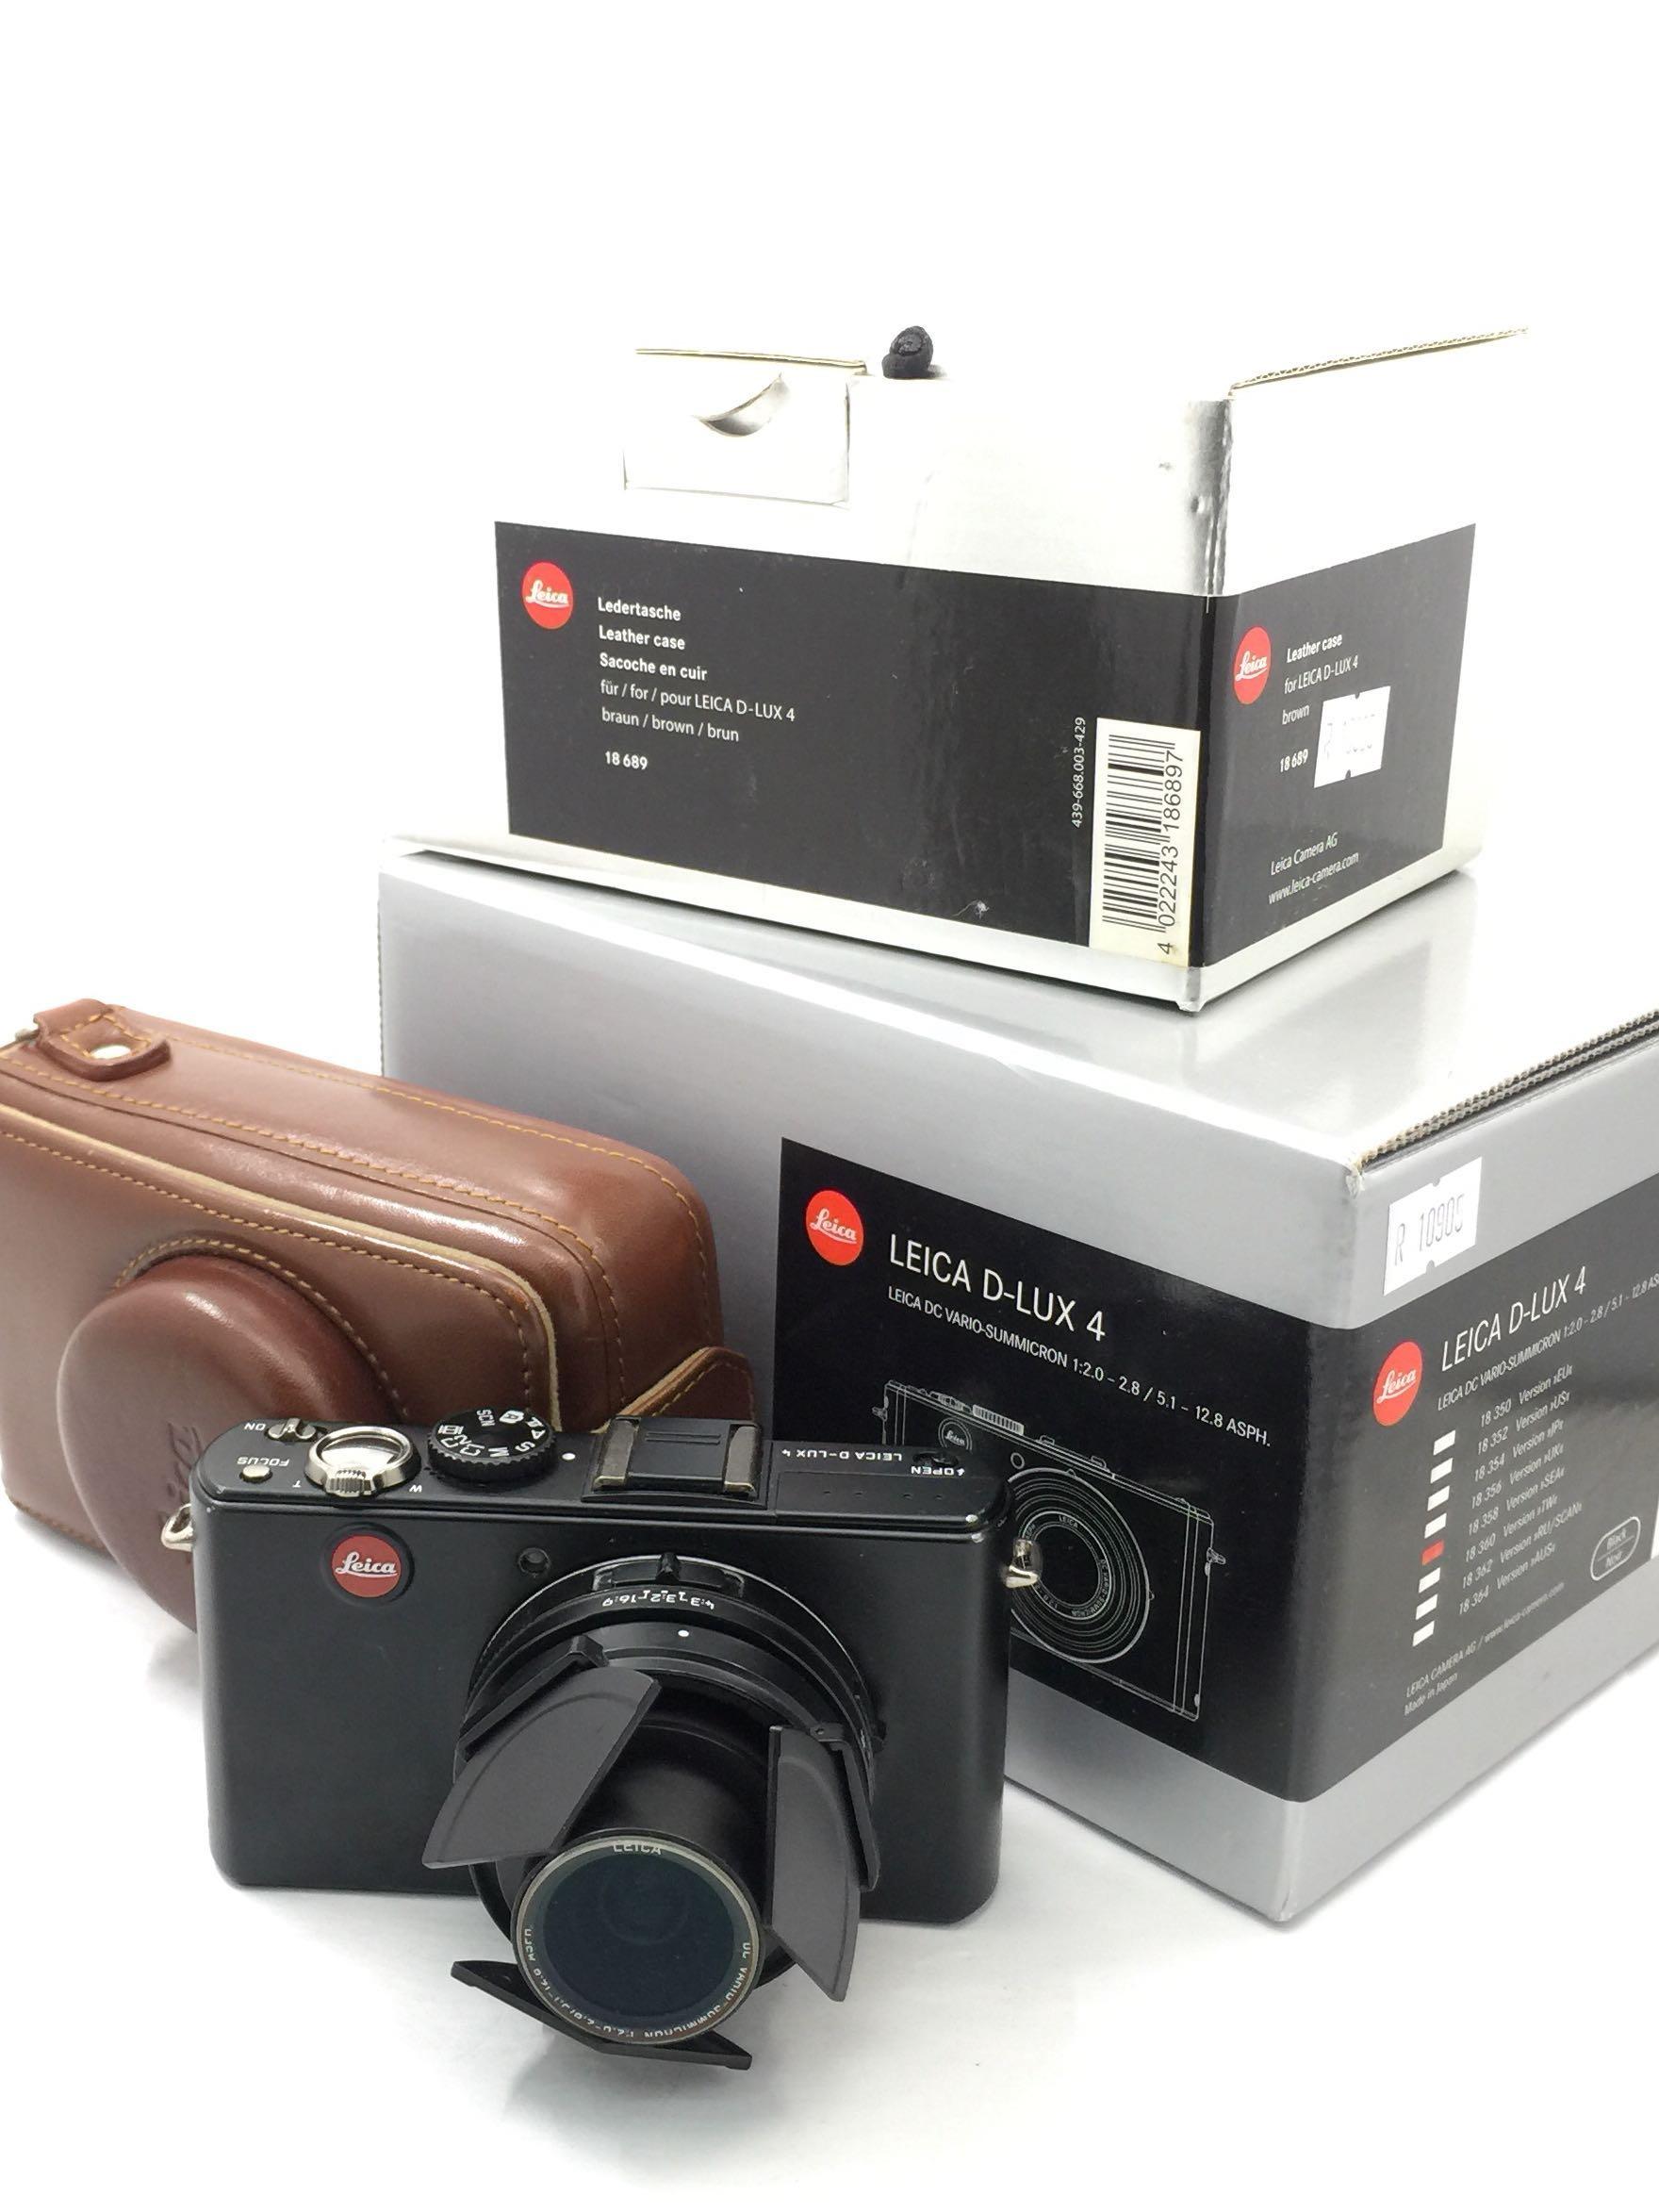 Leica d lux 4 user manual